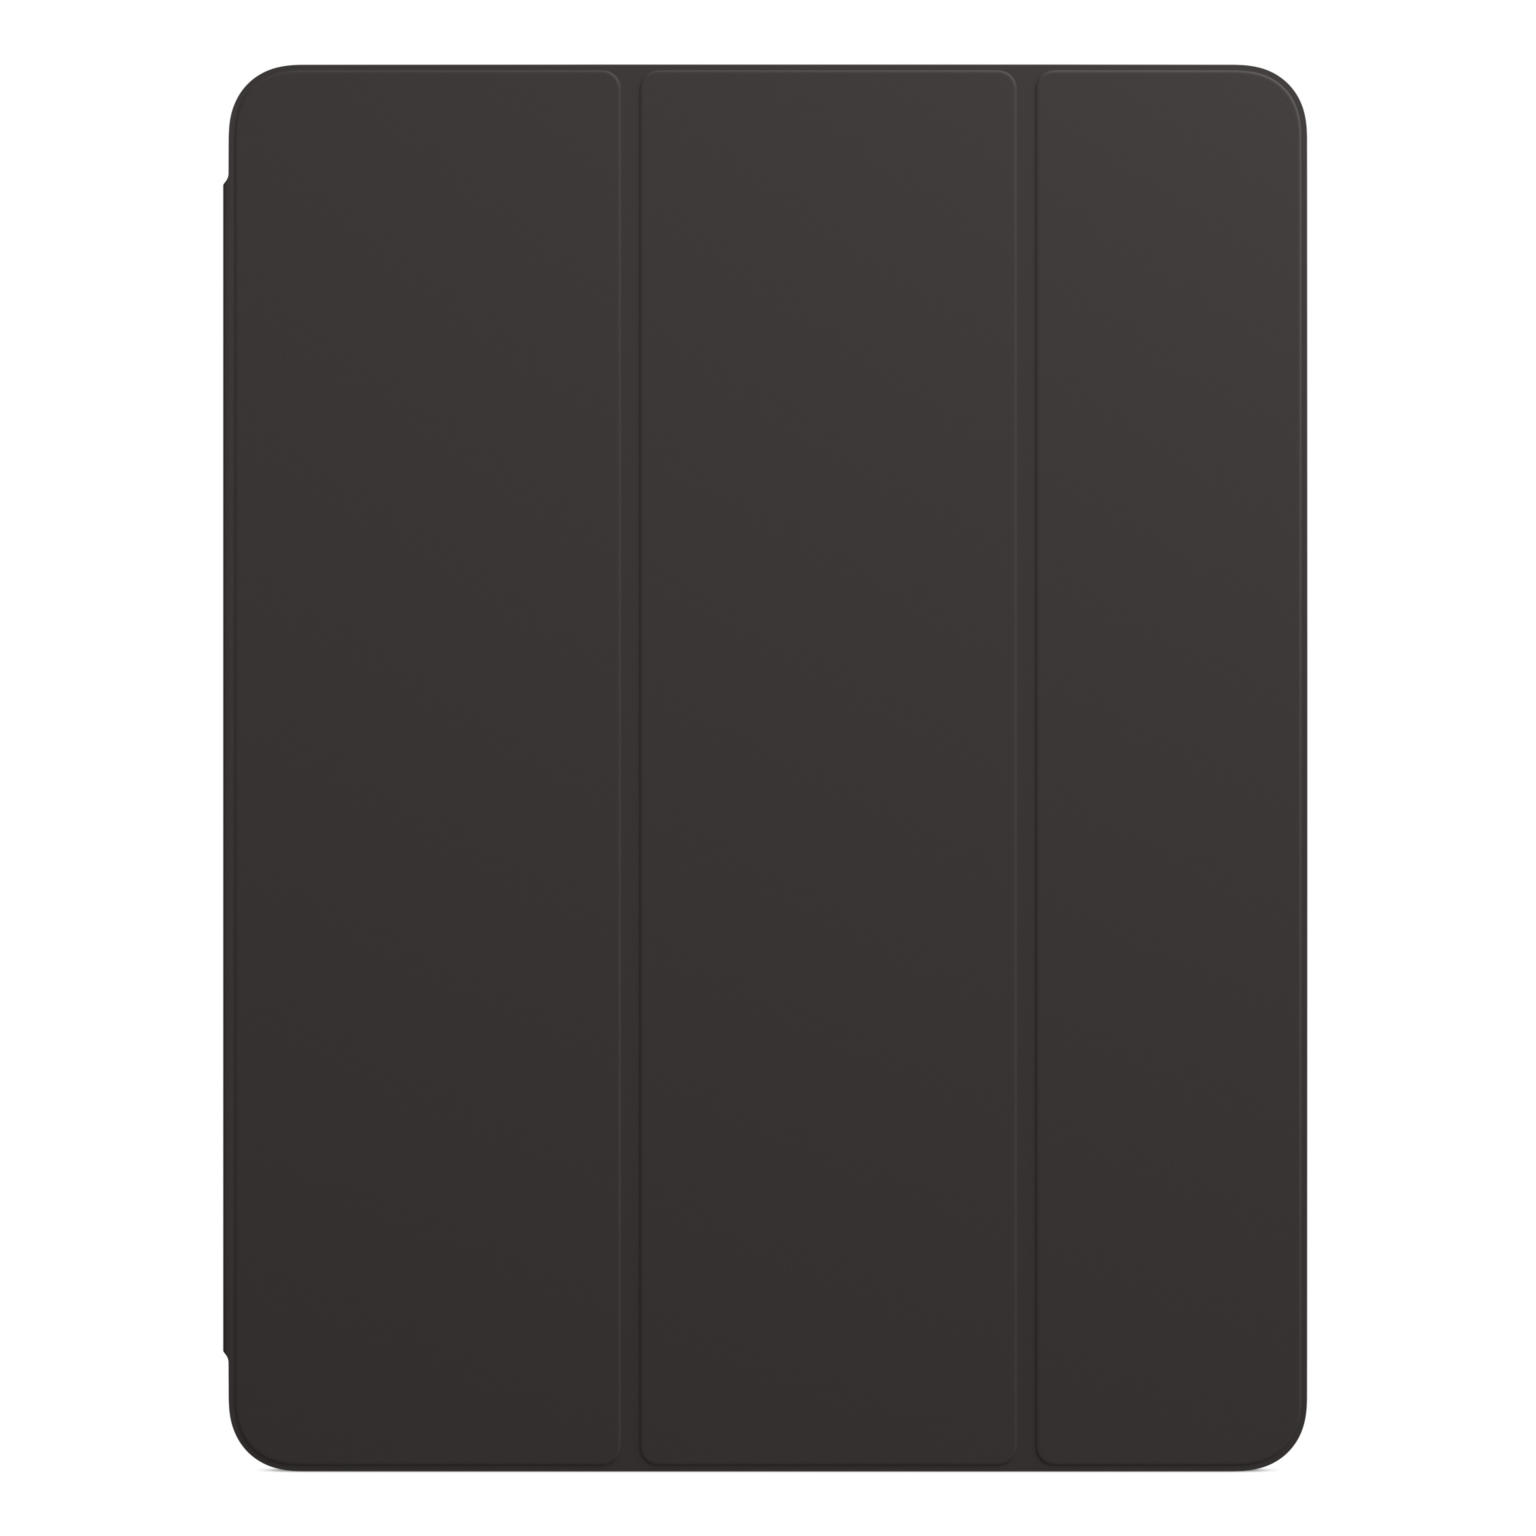 Aanbieding Beschermhoezen. Apple Smart Folio iPad Pro 12